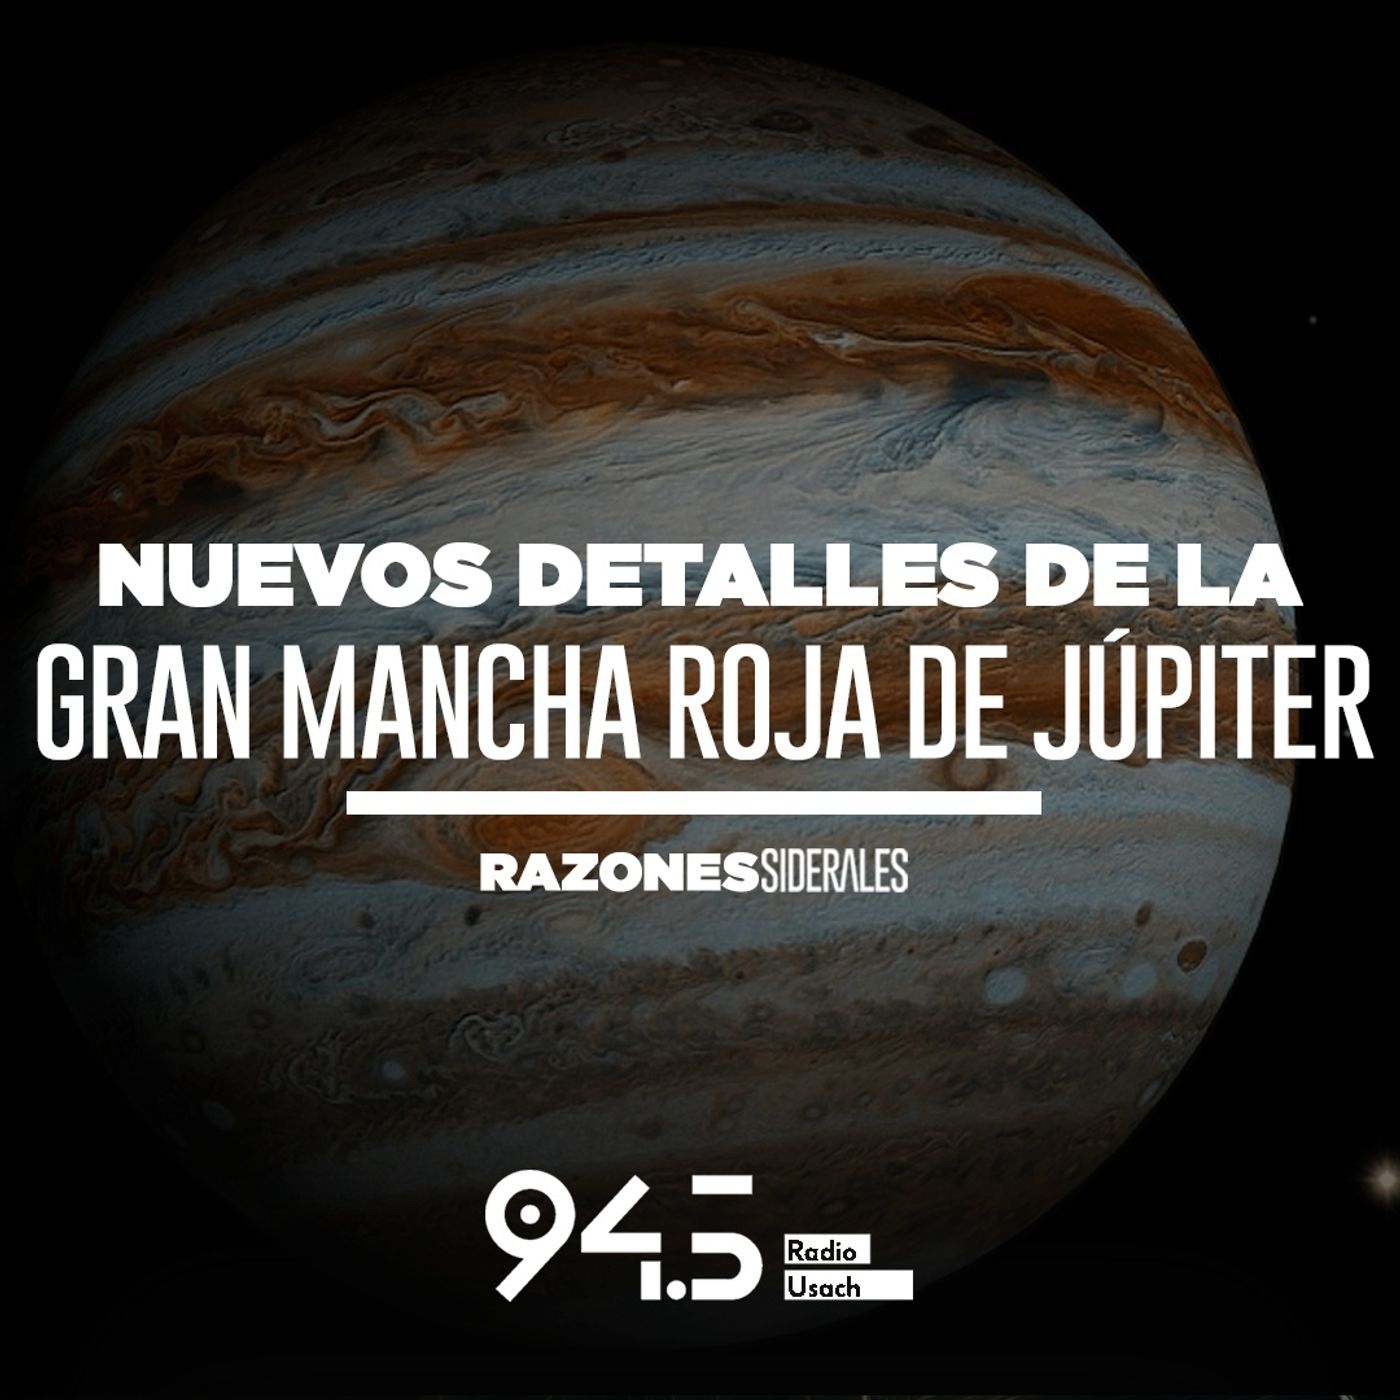 Nuevos detalles de la gran mancha roja de Júpiter